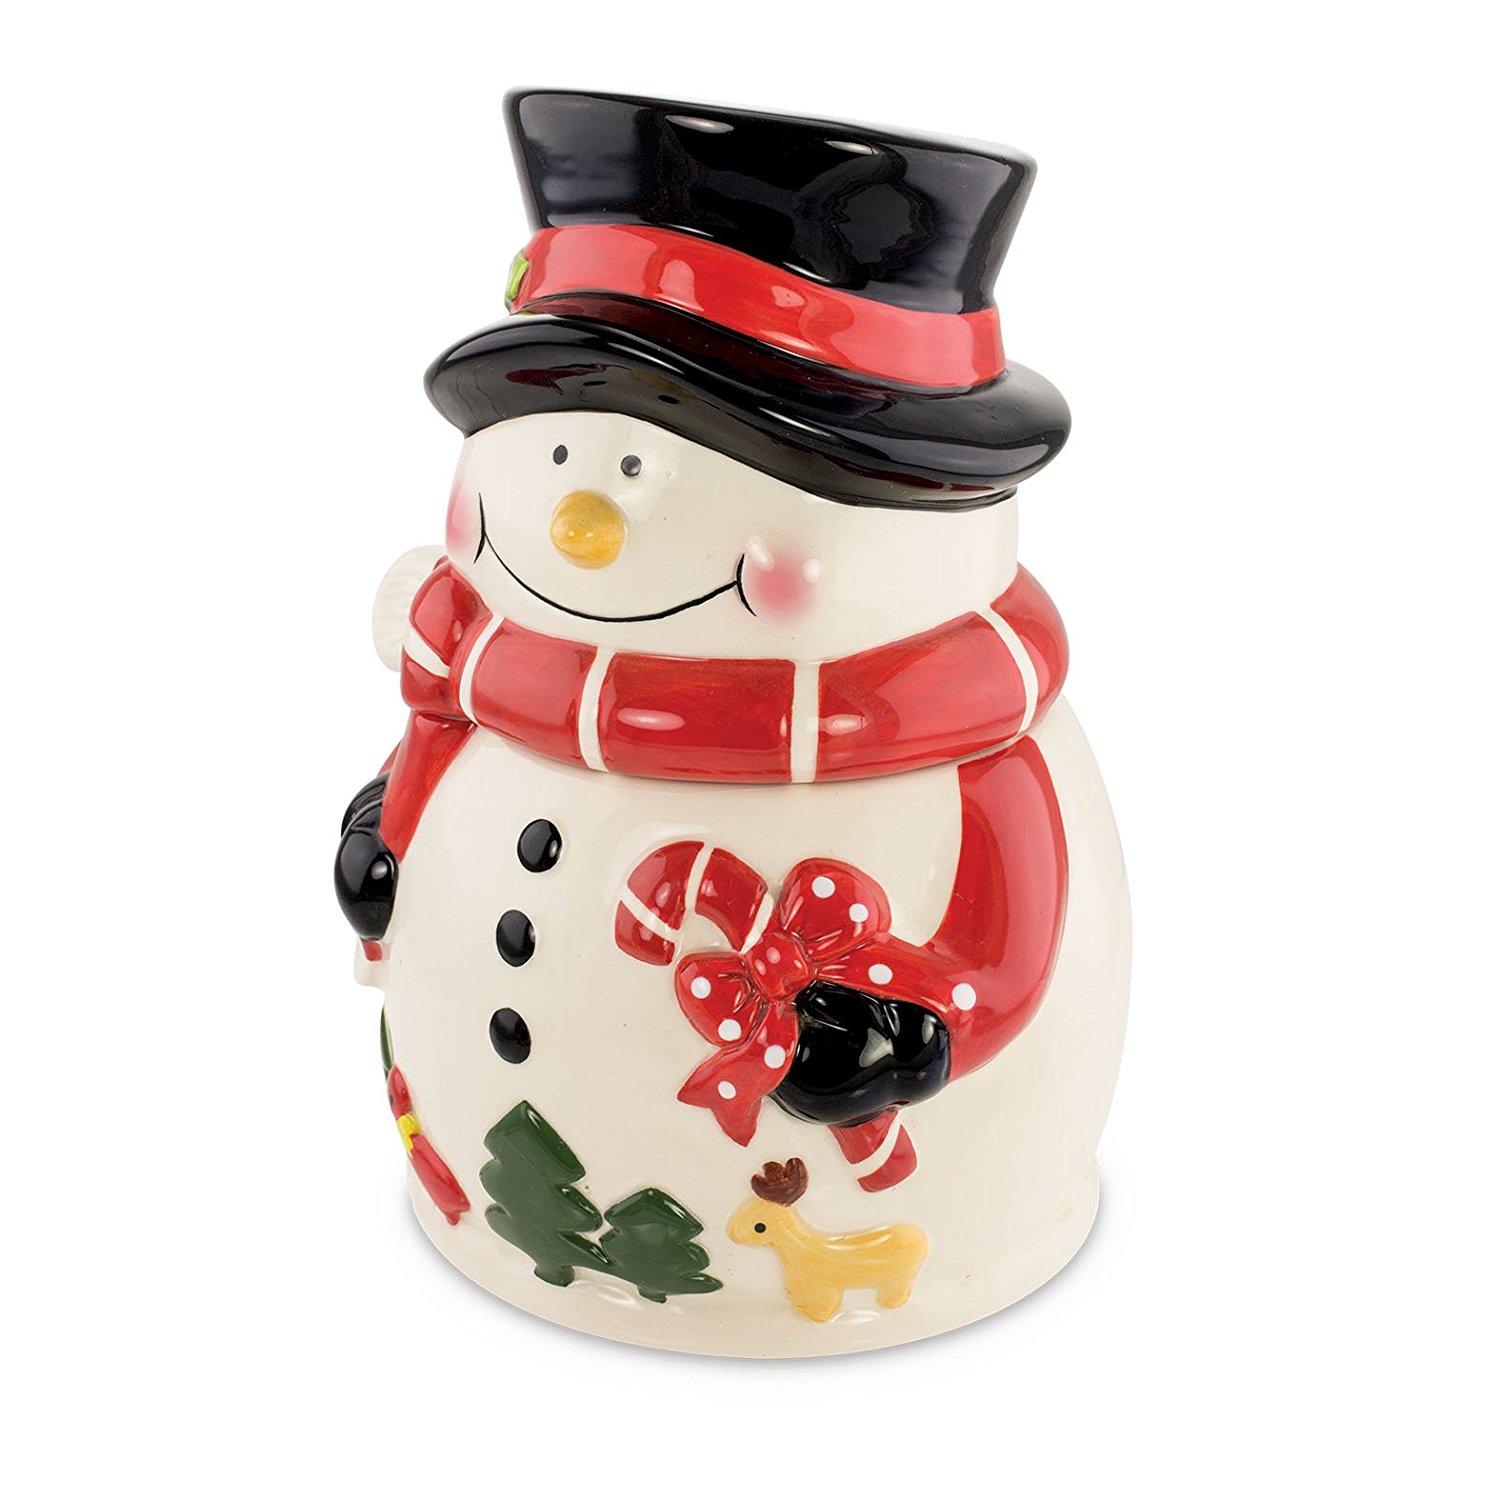 Snowman Holiday Ceramic Cookie Jar - KOVOT